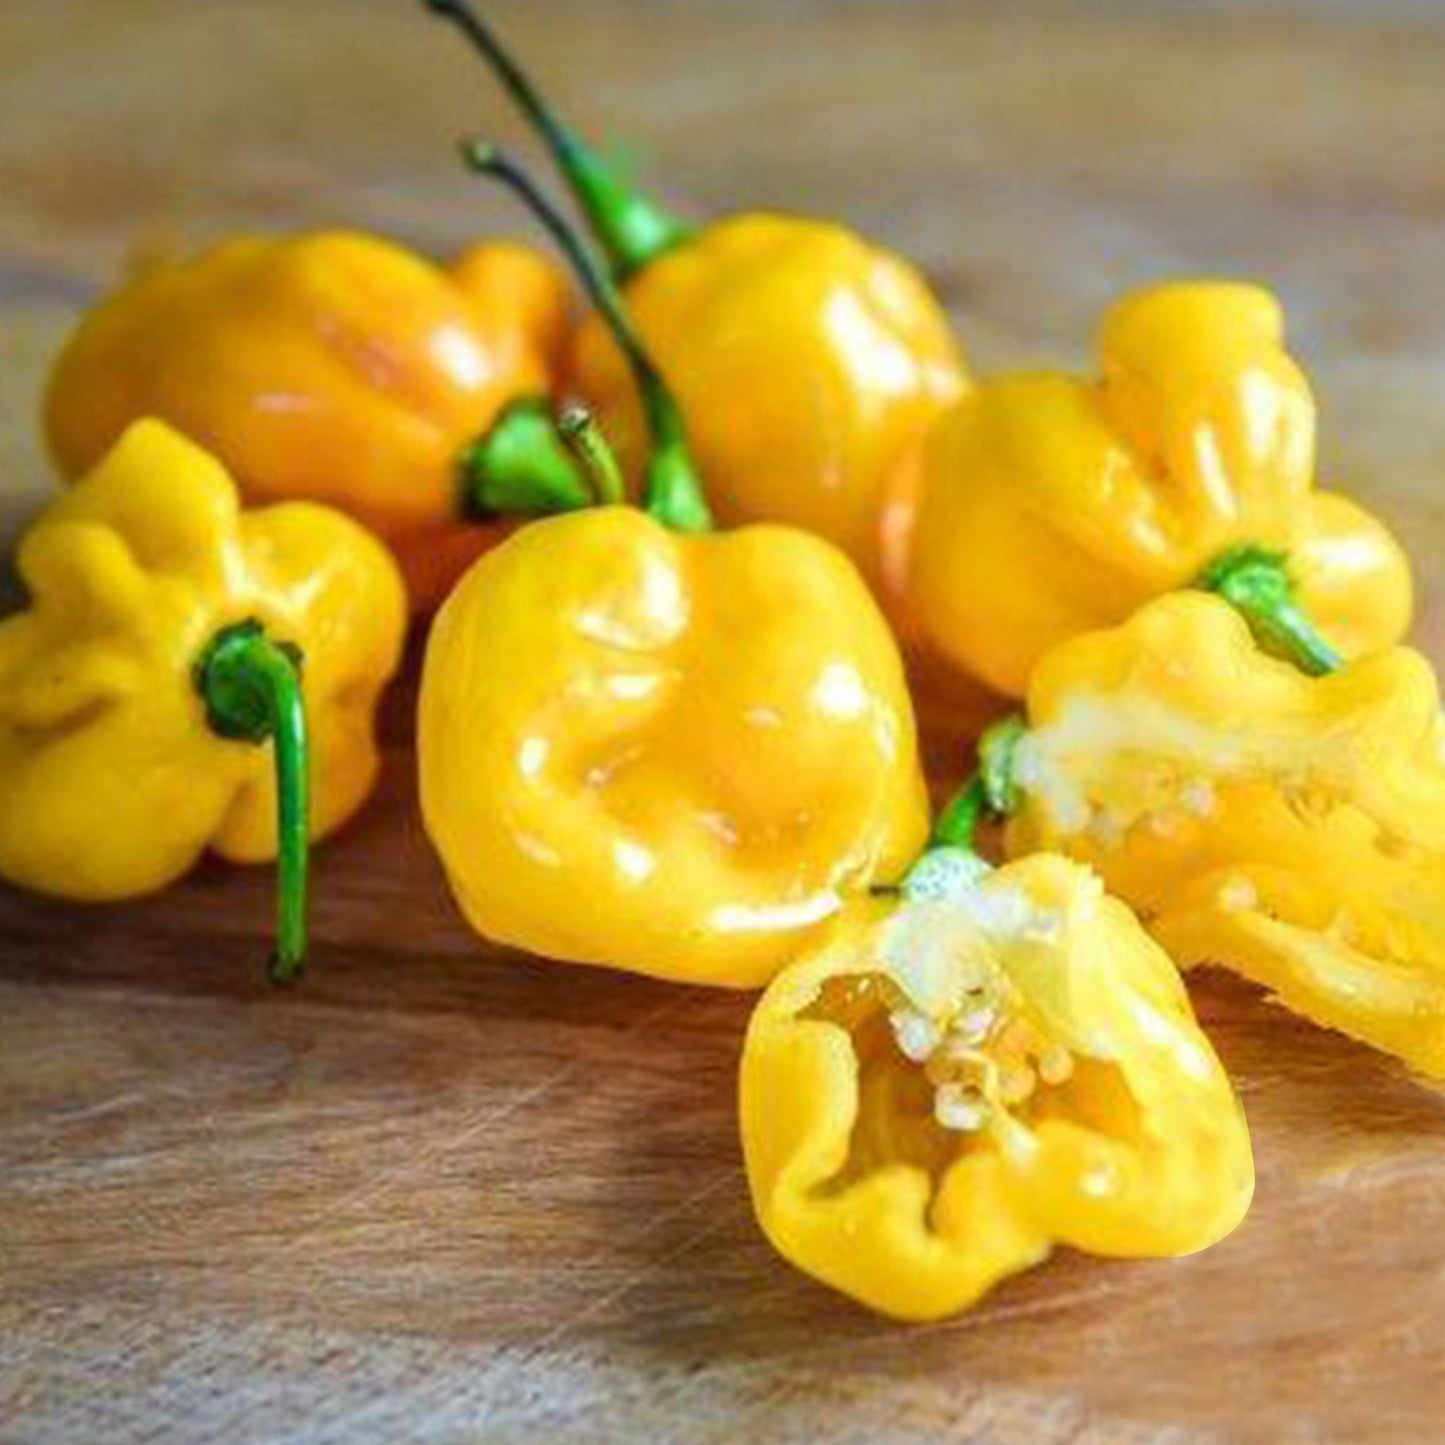 Pepper Joe's Small Yellow Cherry Hot Peppers